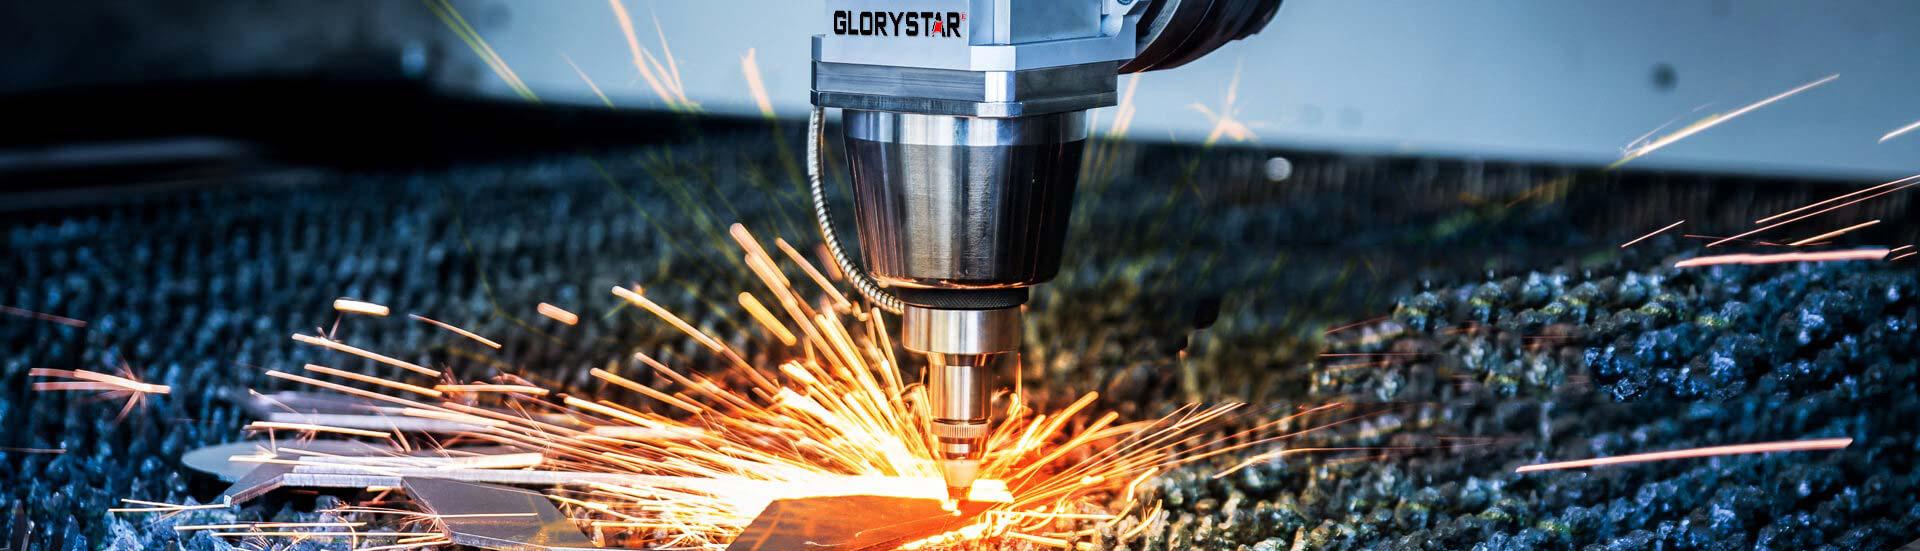 Glorystar Laser Group